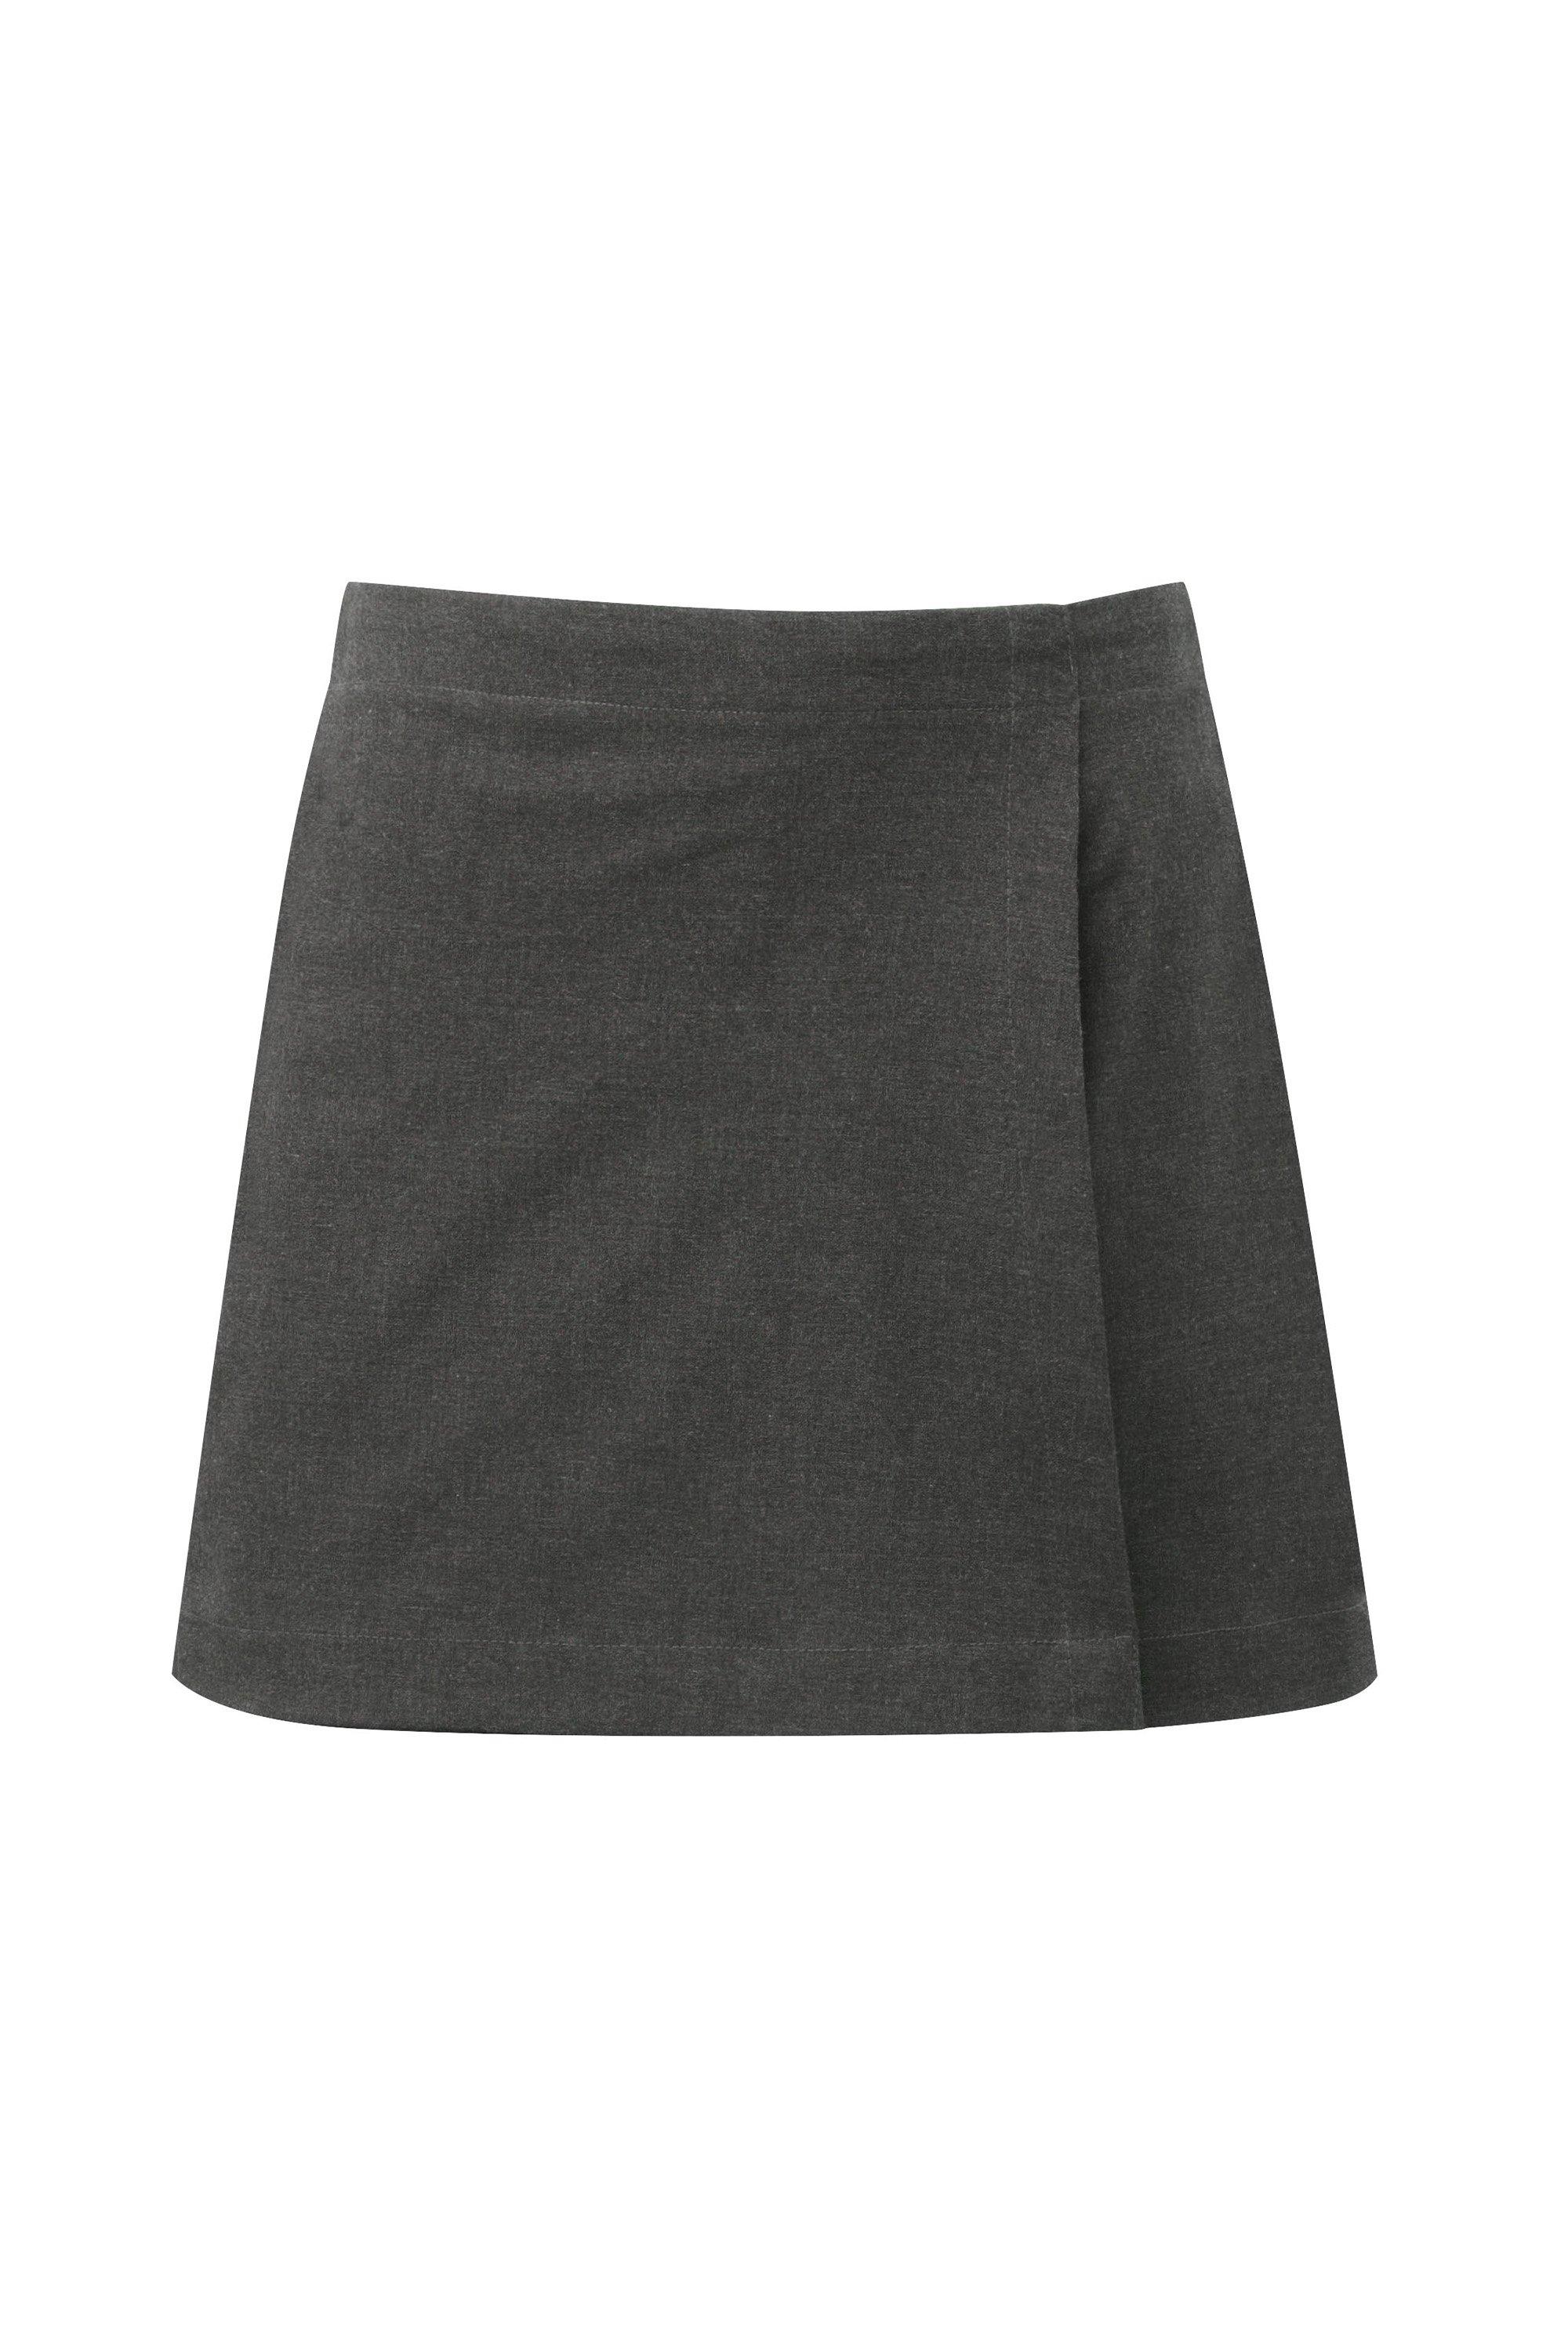 Школьная юбка David Luke, серый одежда blyth школьная форма юбка джинсовая юбка кружевная юбка для blyth azone ob22 аксессуары для кукол